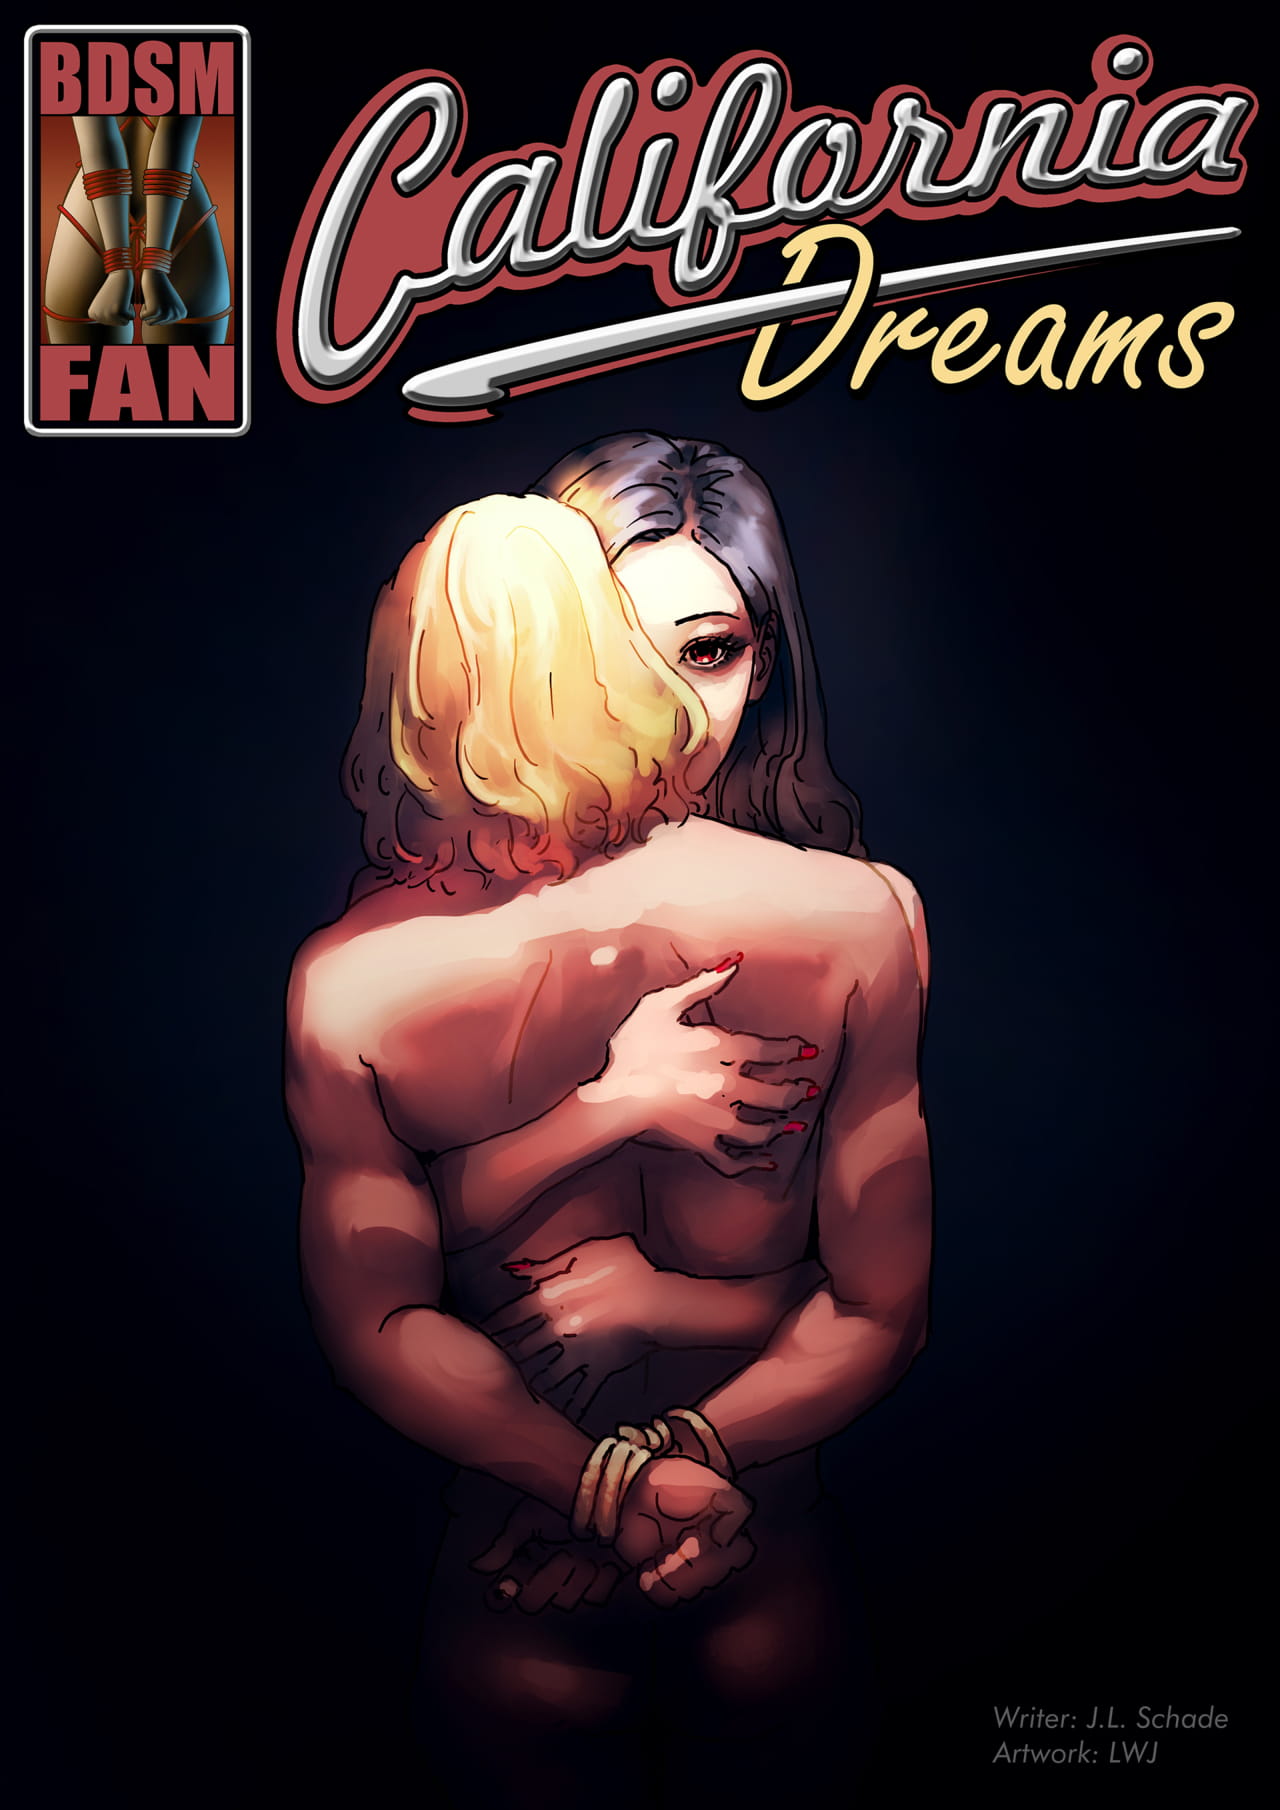 BDSM FAN - California Dream